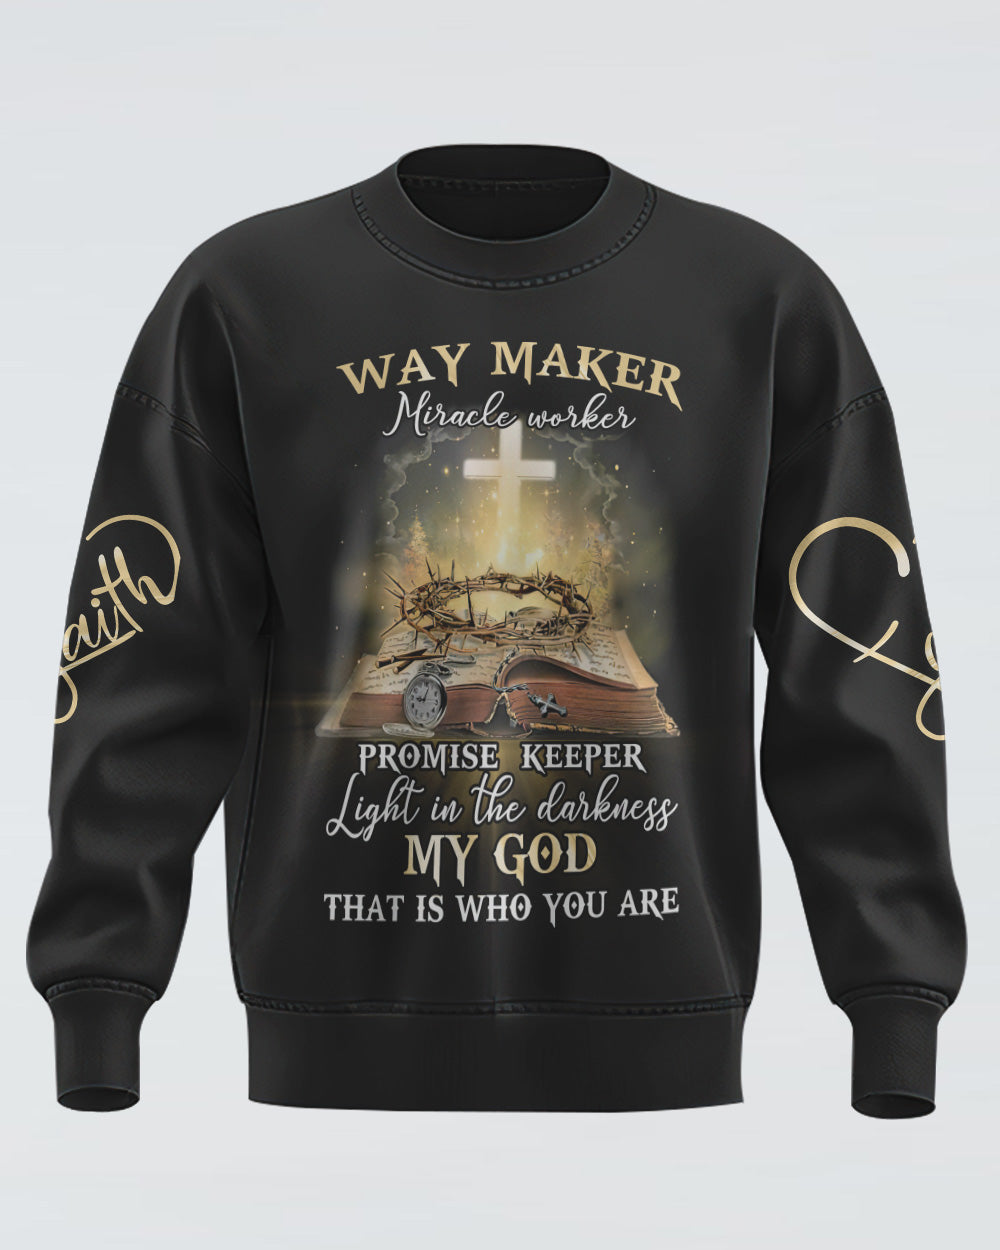 Way Maker Miracle Worker Bible Women's Christian Sweatshirt